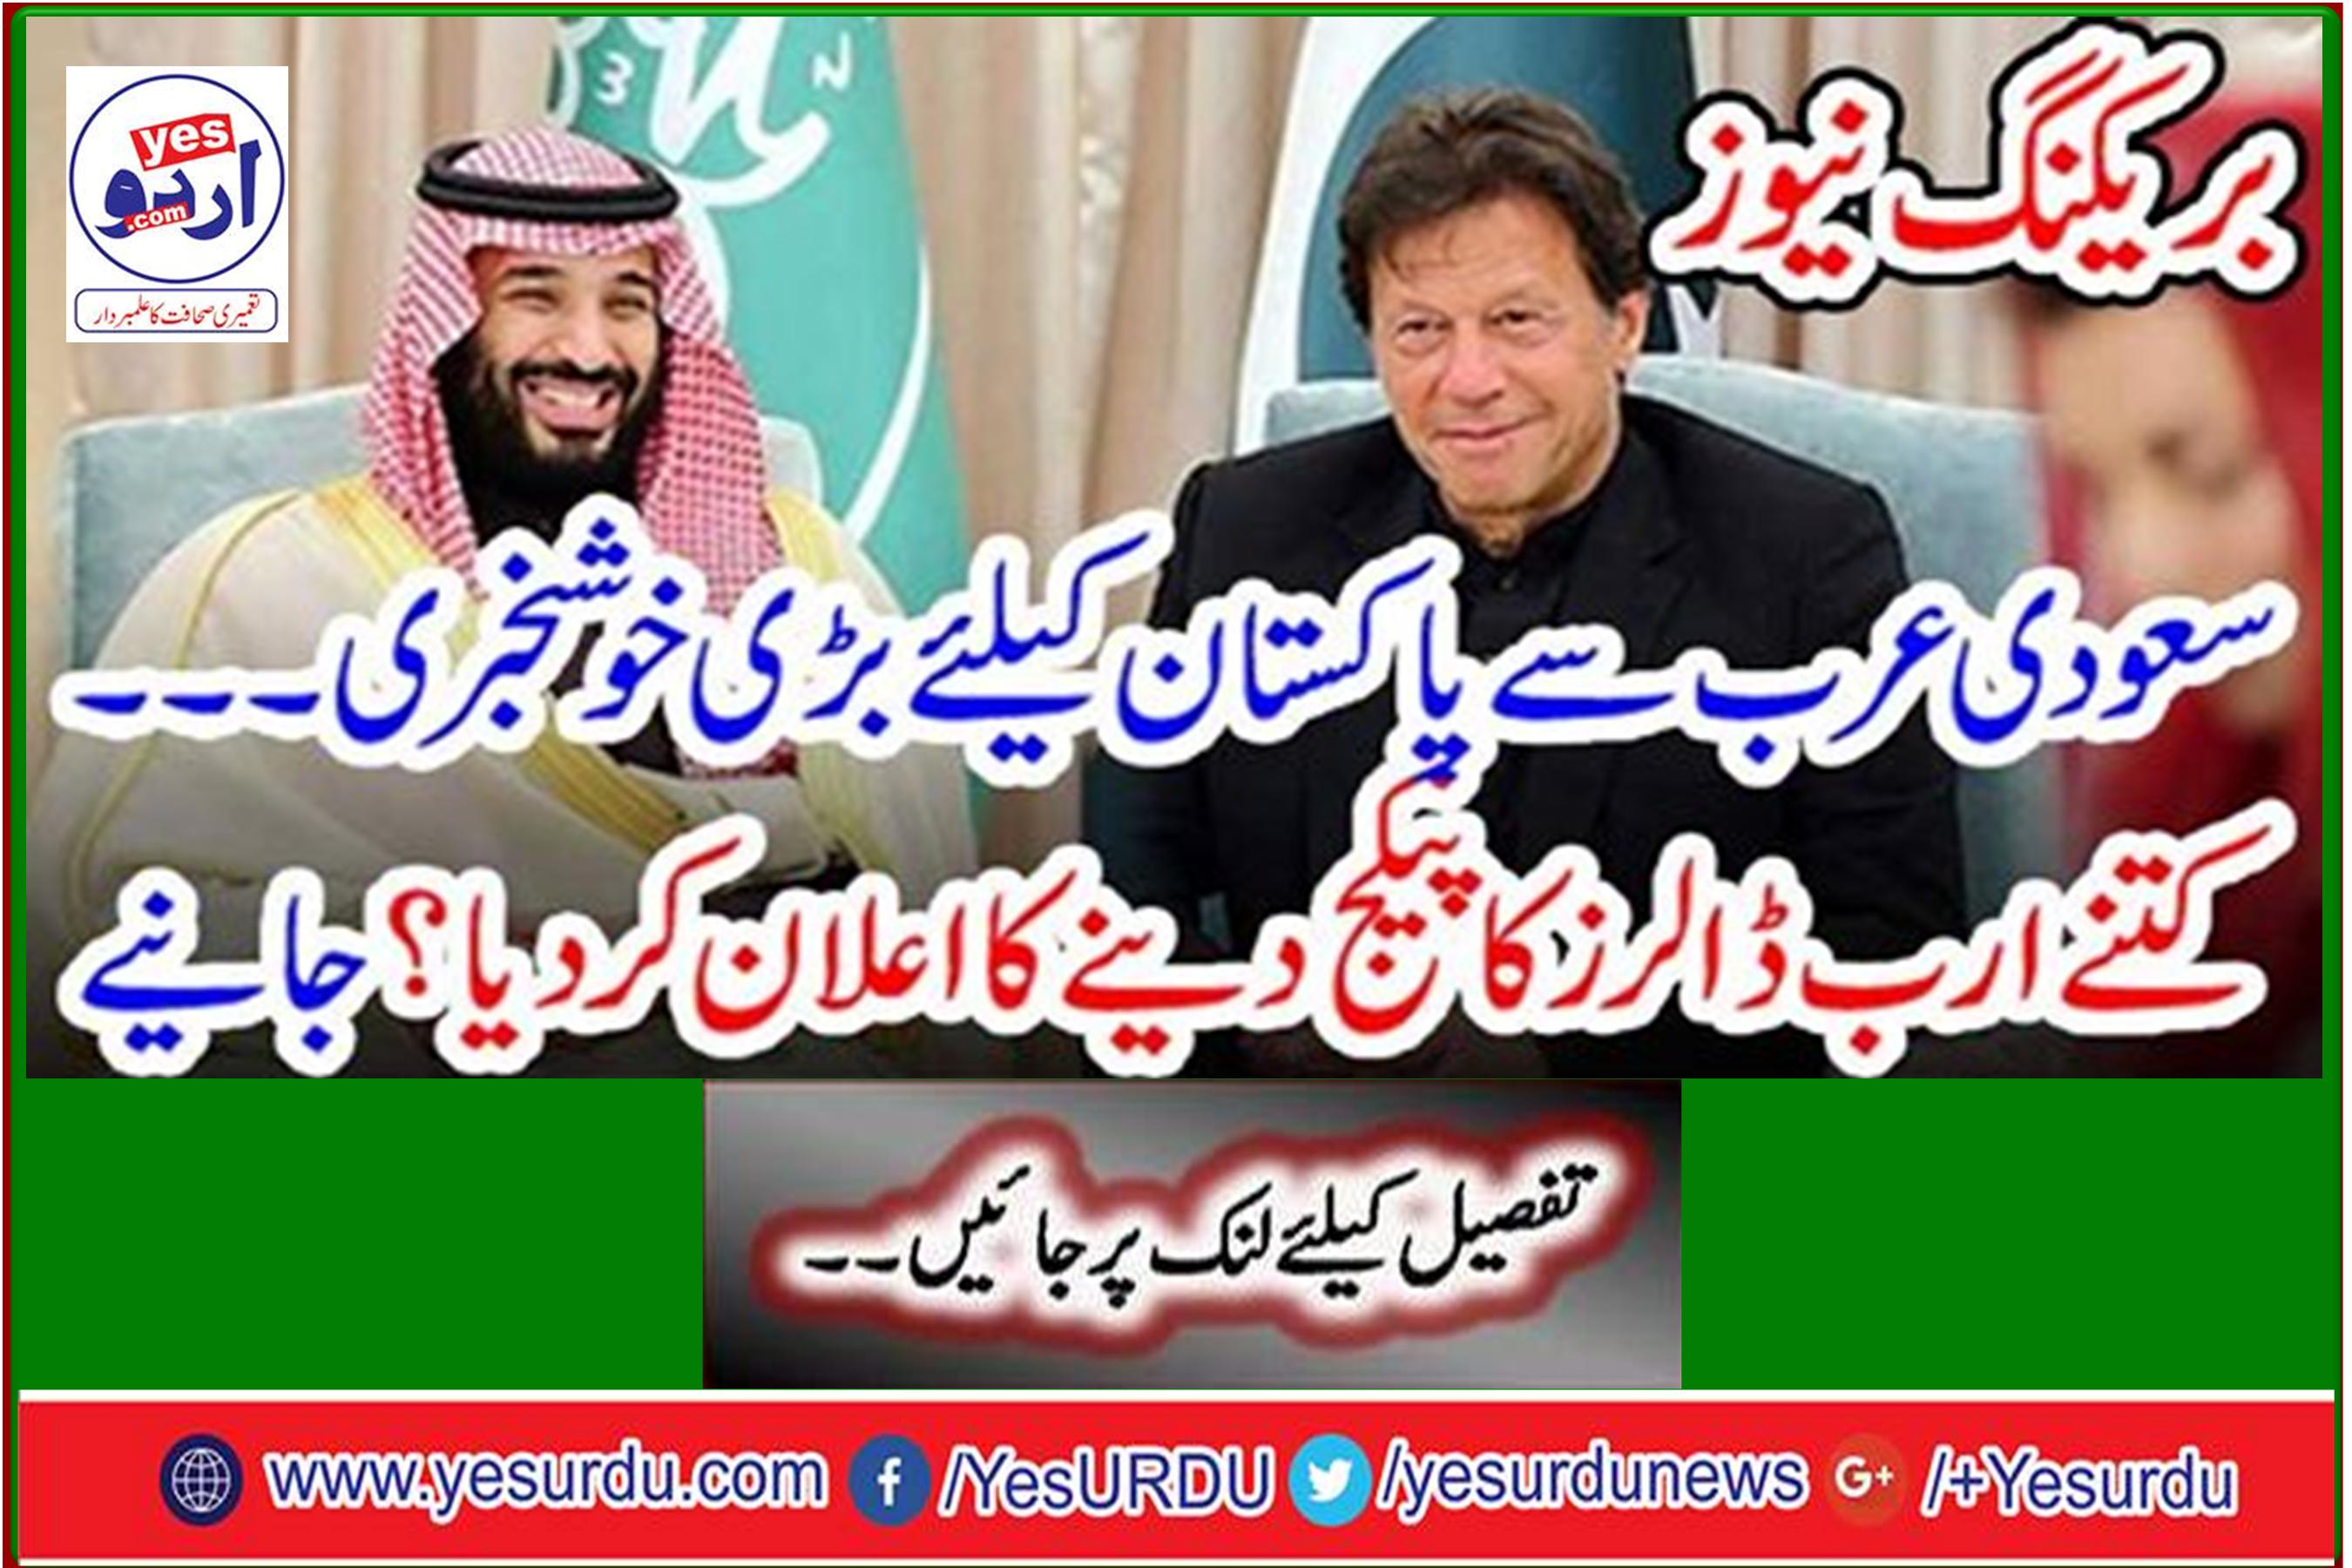 Breaking News: Great news for Pakistan from Saudi Arabia - How many billion dollars Zaka package announced? Learn